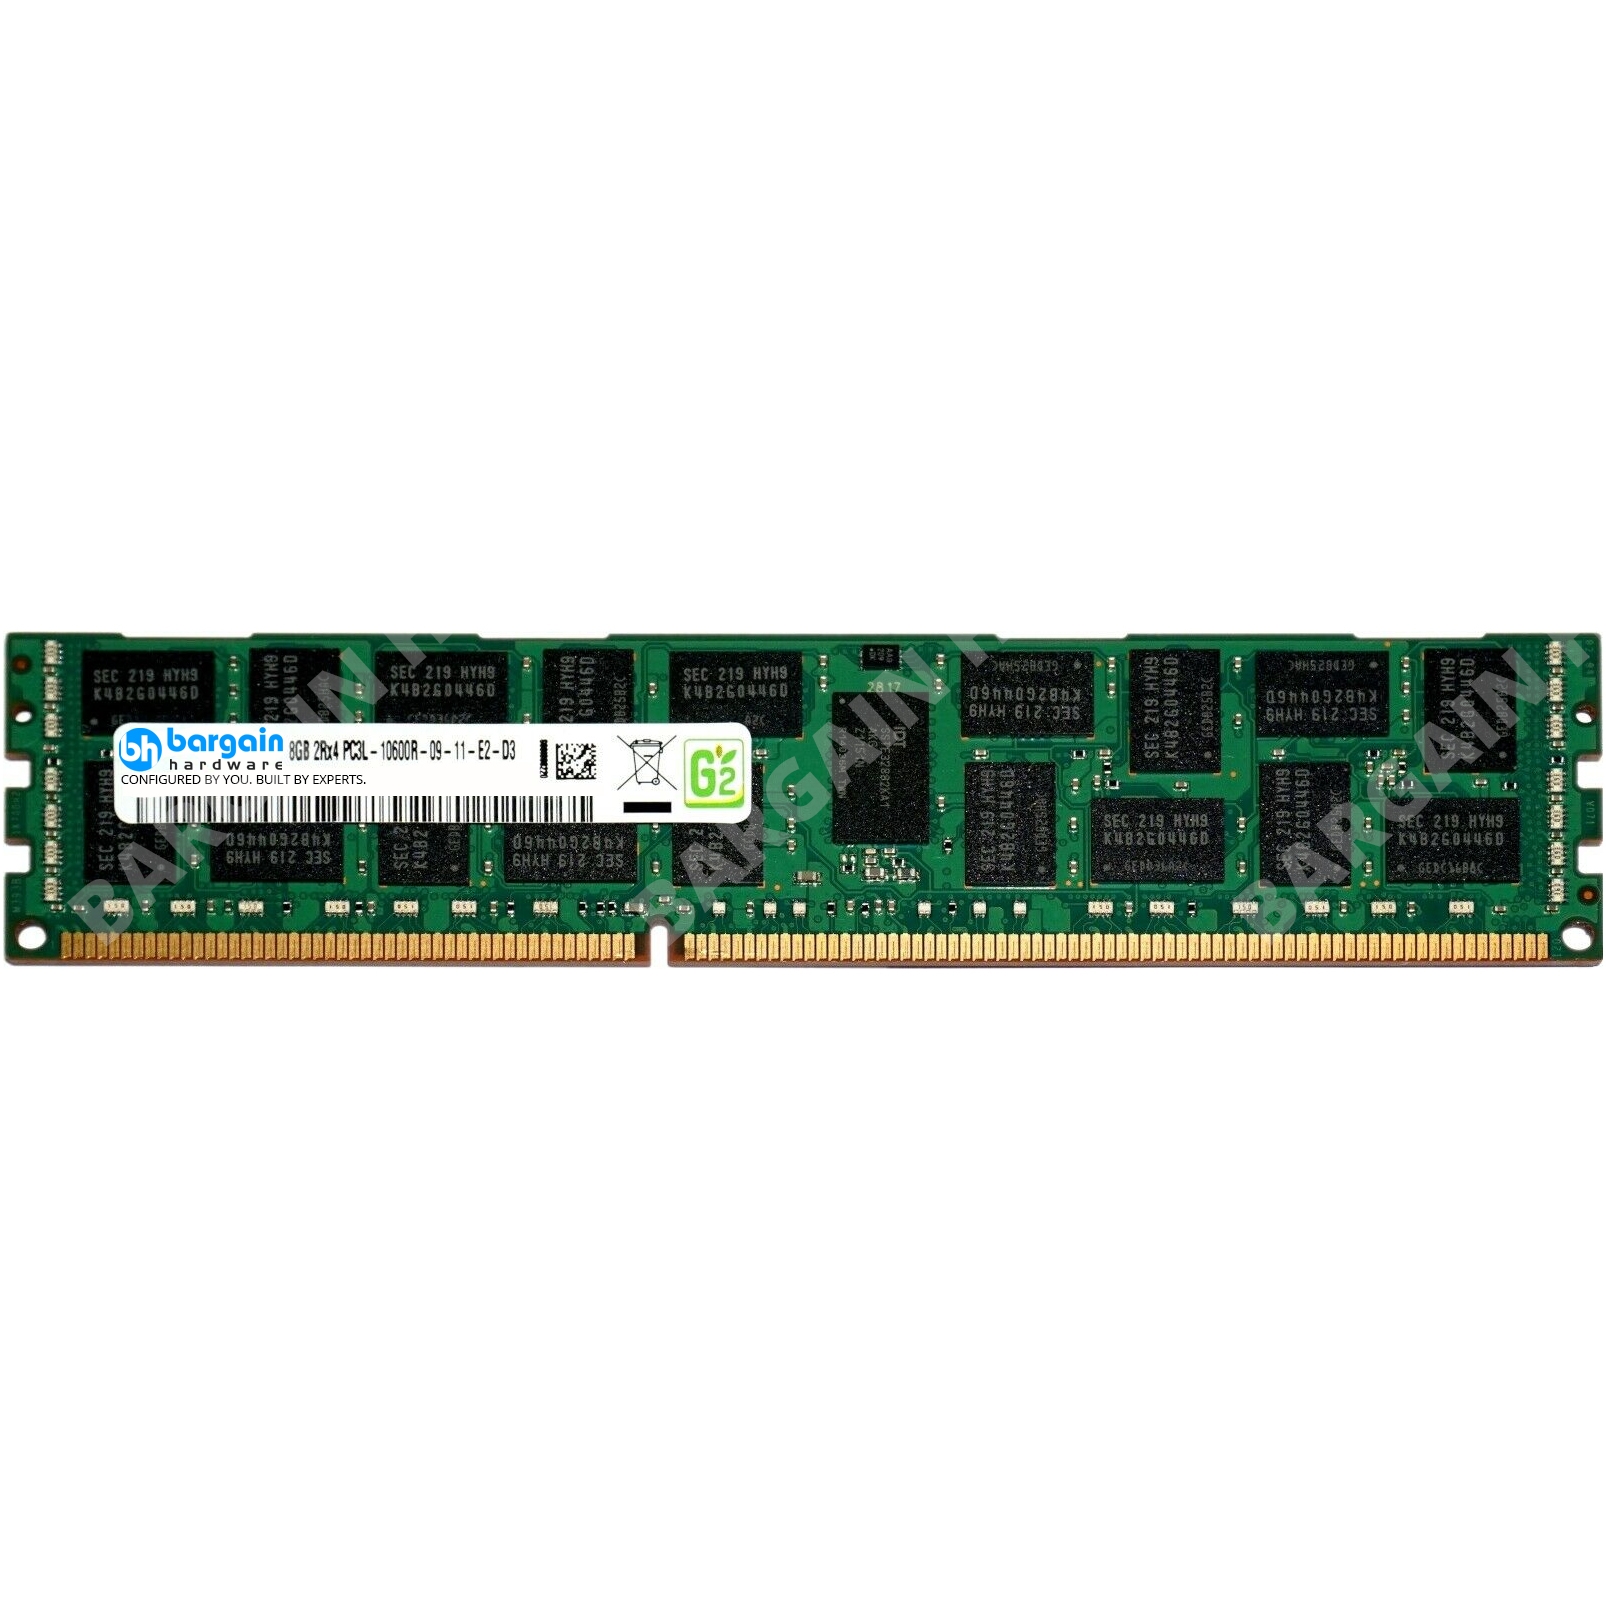 2x 8GB PC3L-10600R DDR3 ECC Registered (2Rx4) Server RAM memory - 16GB total